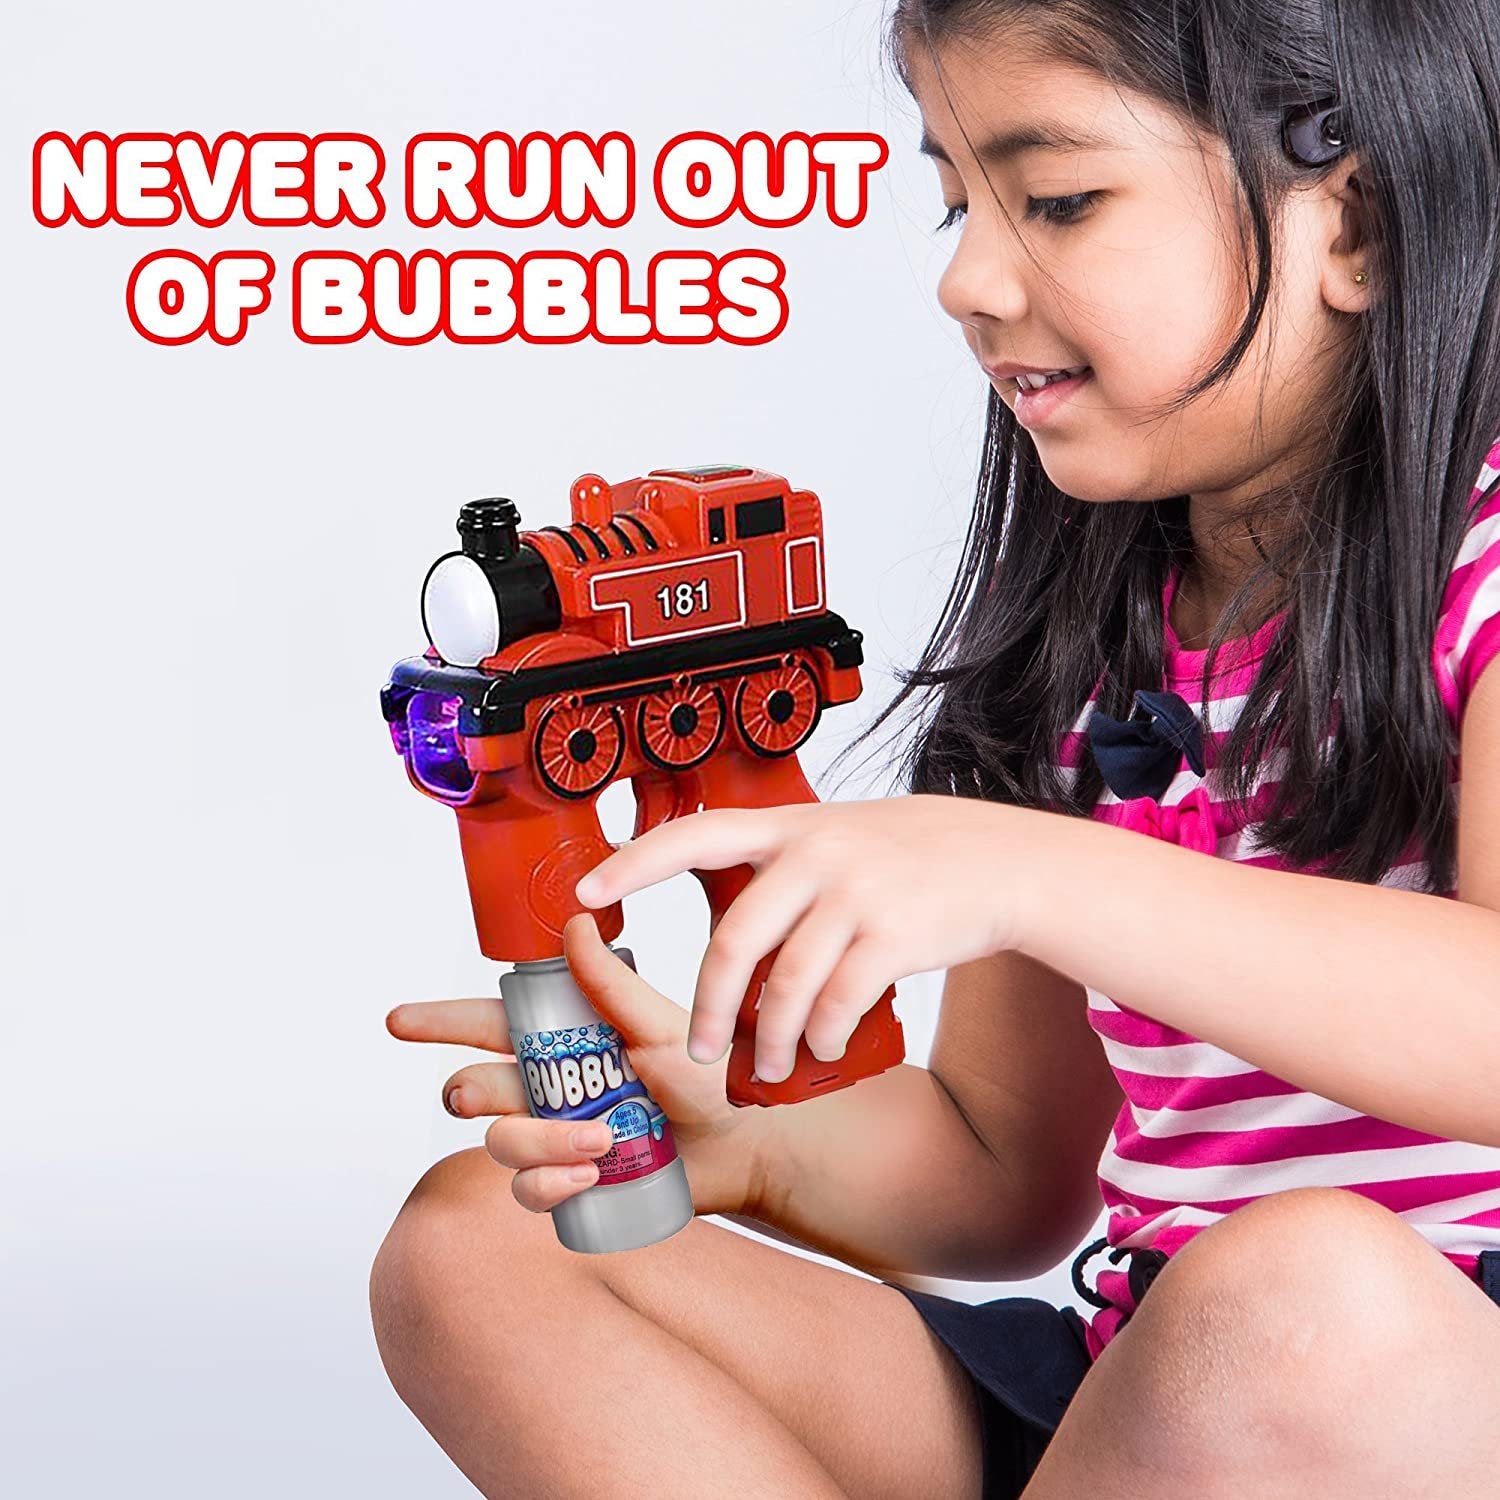 4 oz Bubble Solution Refill for Bubble Guns - 24 Pack 4oz Each - 24 Bottles Non-Toxic Bubble Fluid for Kids - Liquid for Bubble Machine, Bubble Blowing Gun, and Toy Wands